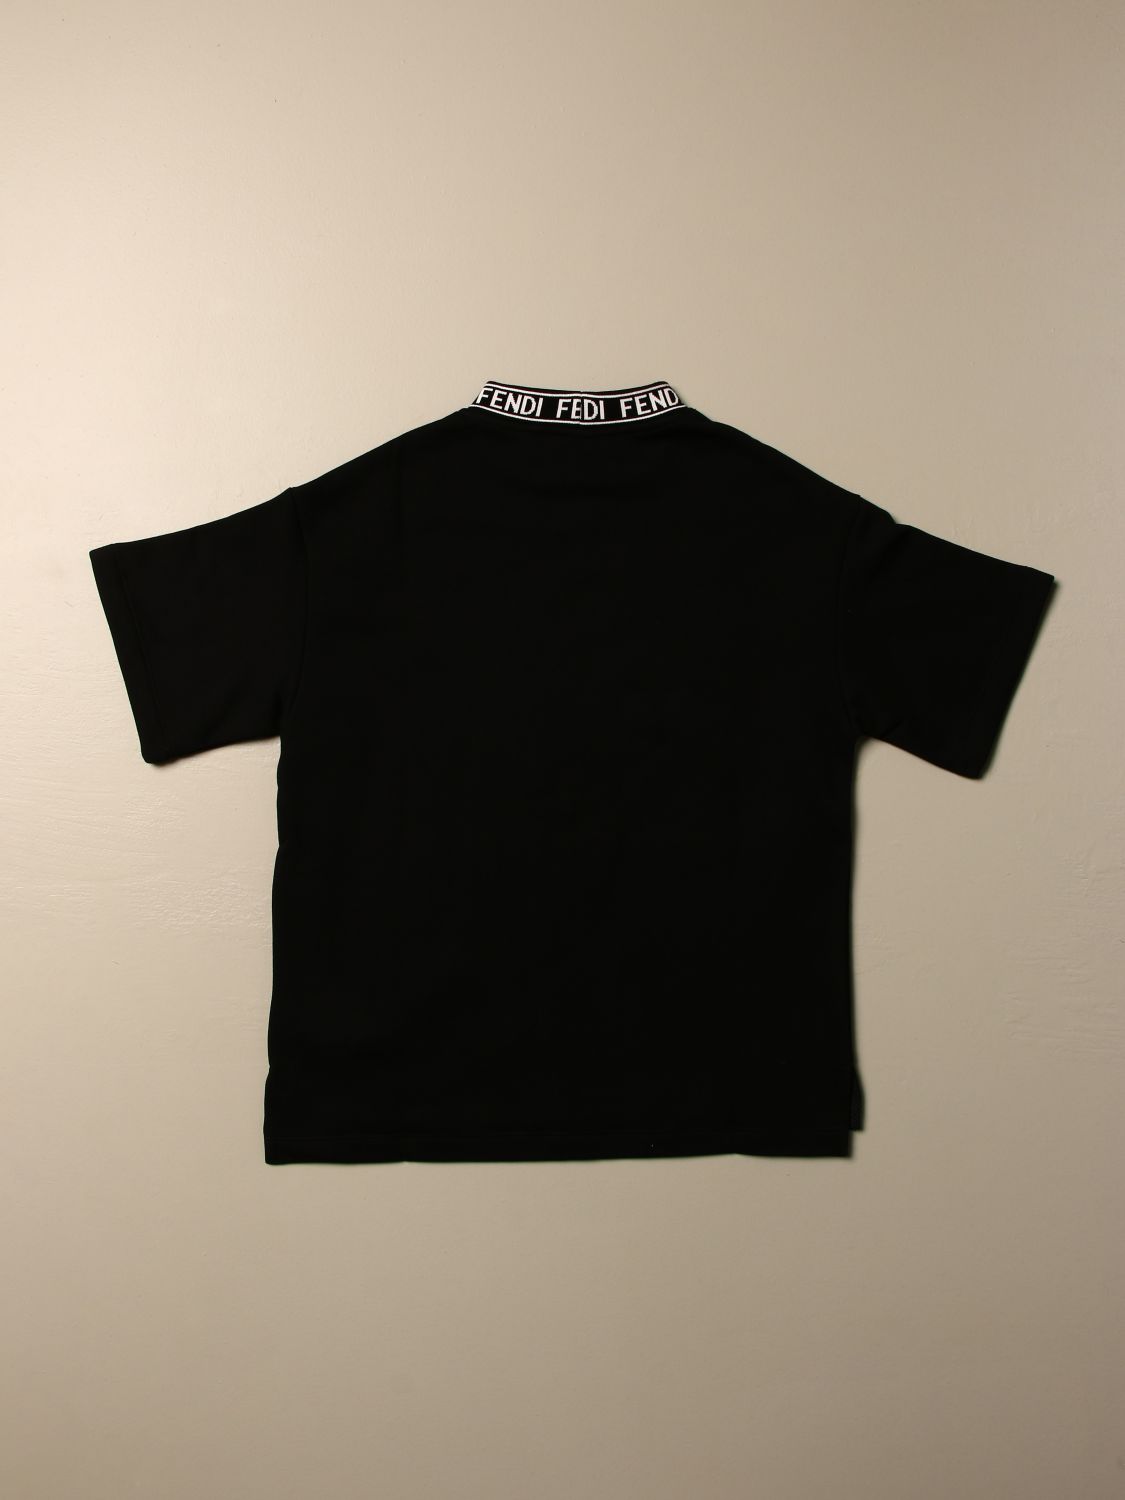 fendi black shirt